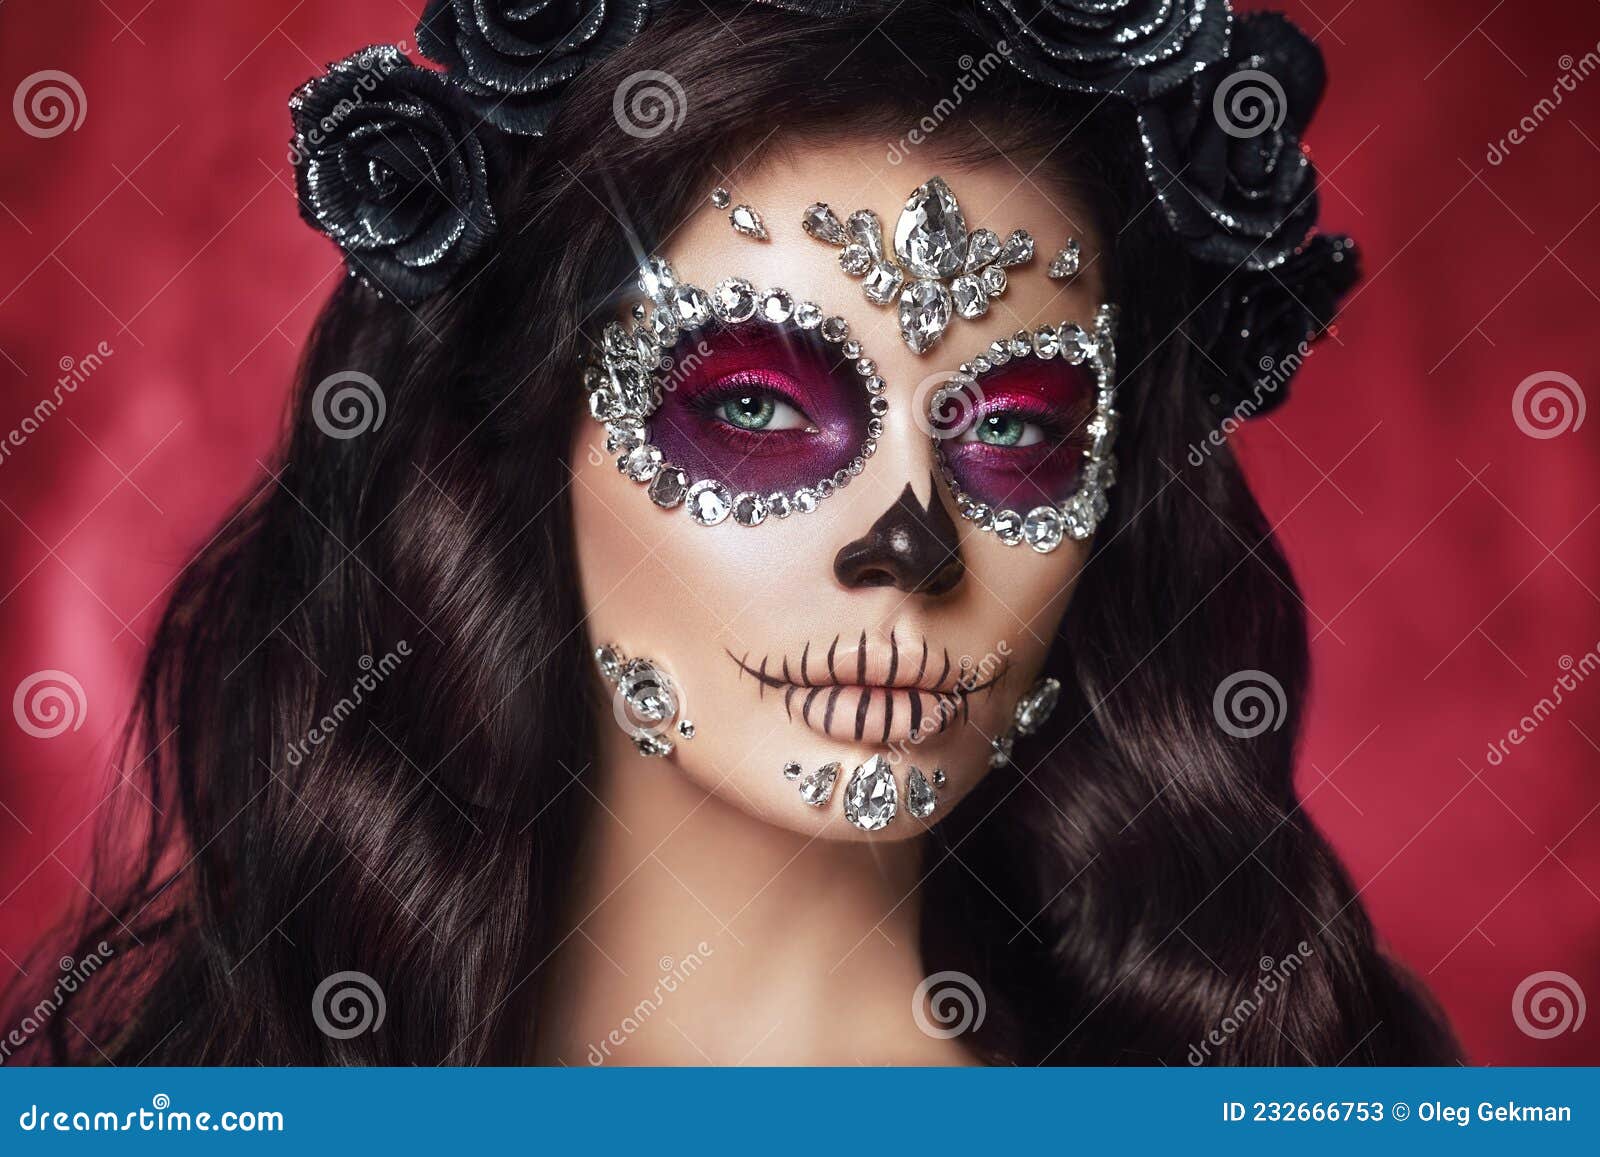 of Woman Makeup Sugar Stock Image - Image of halloween, face: 232666753